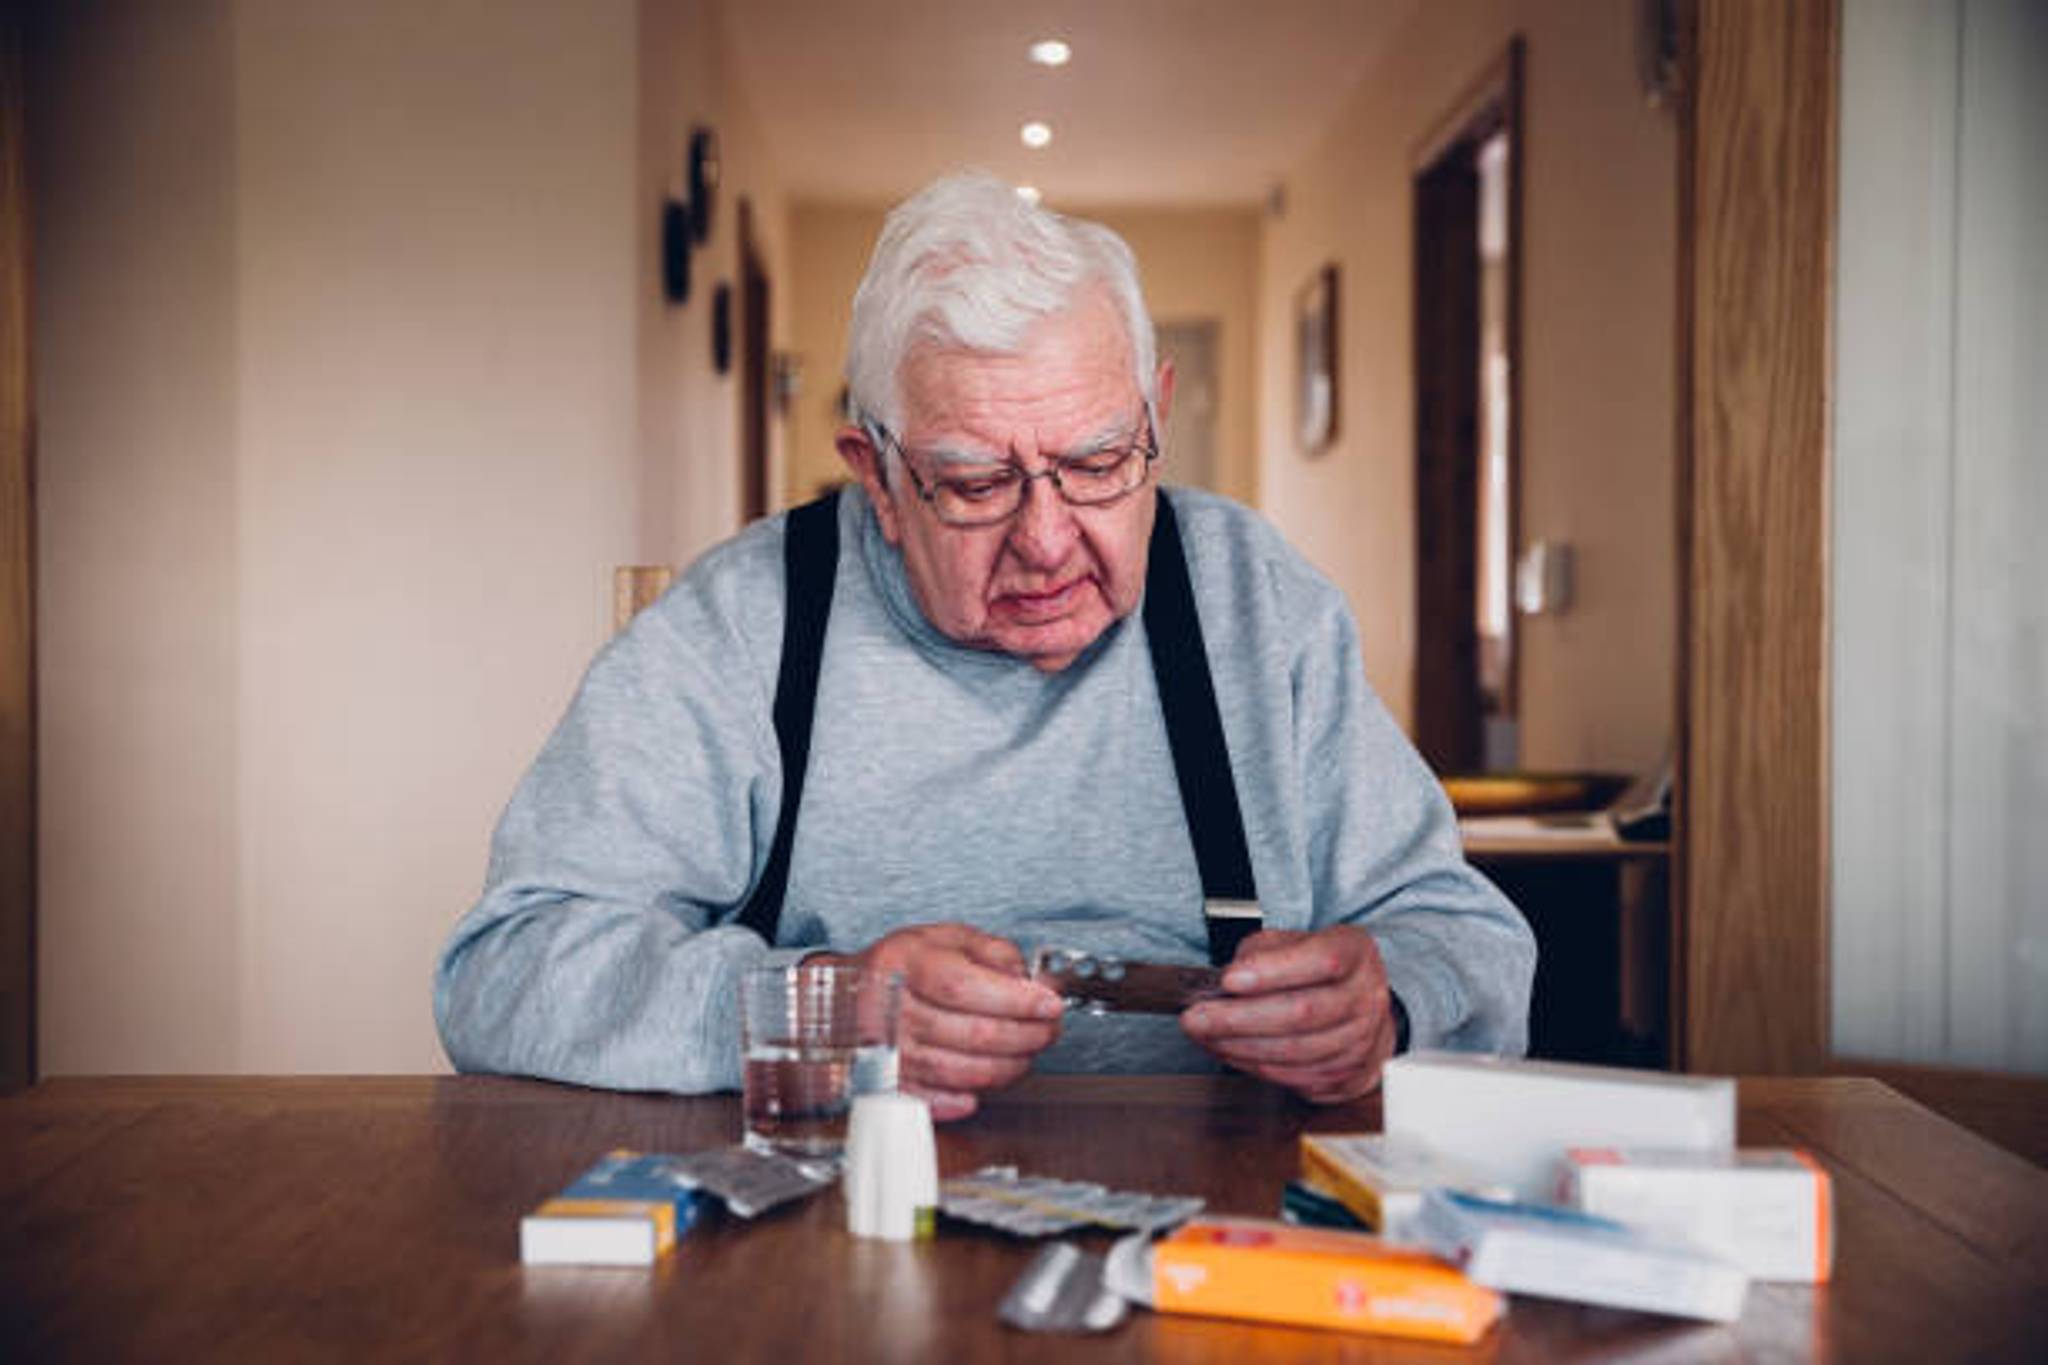 Ōmcare makes sure seniors adhere to their medication